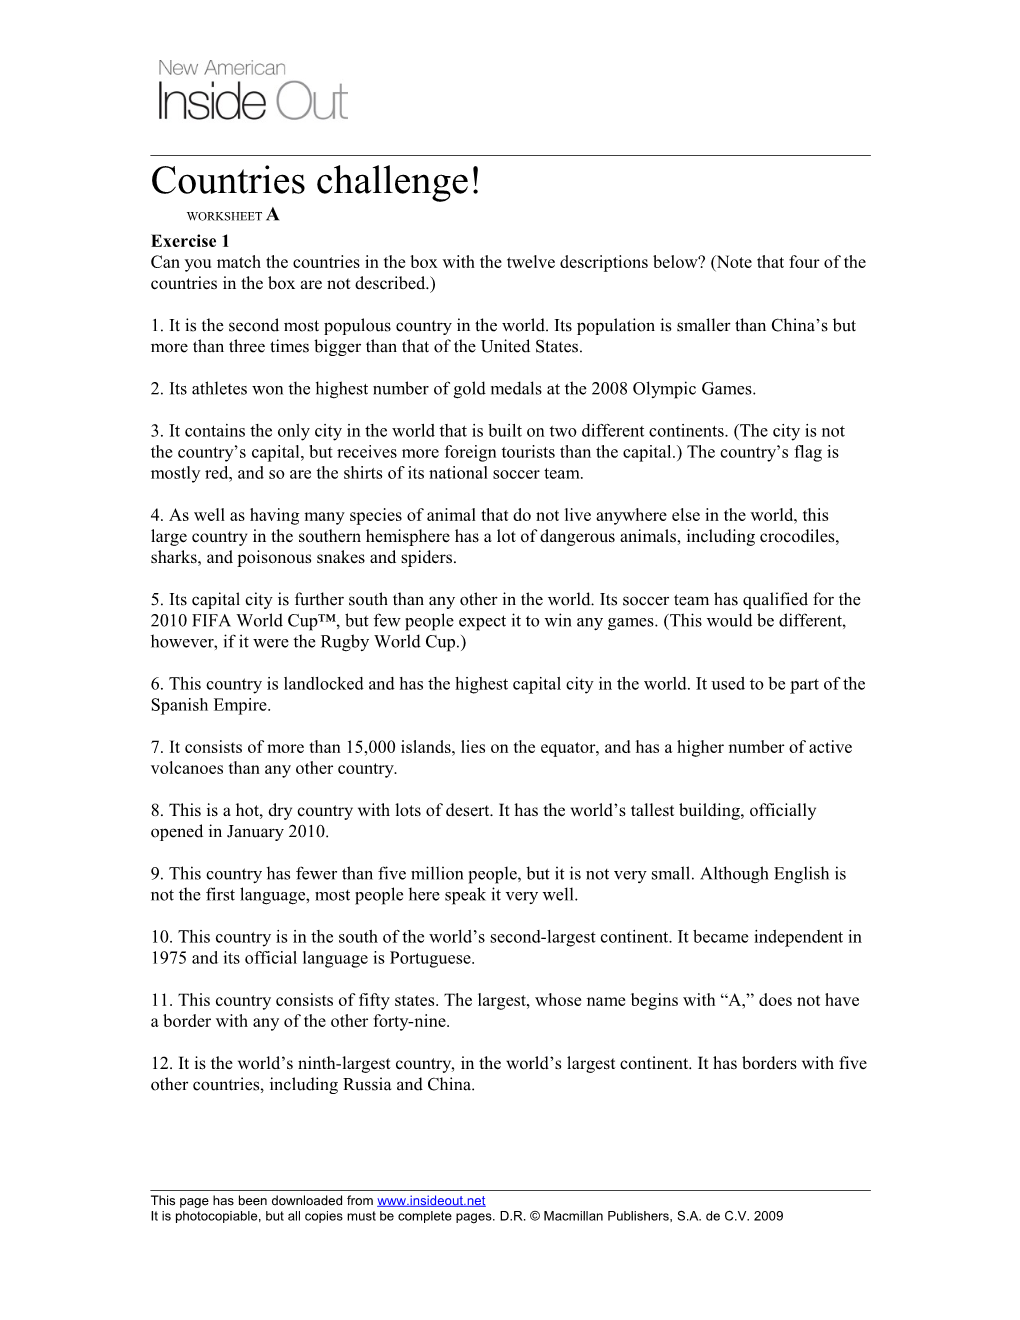 Countries Challenge! Worksheeta